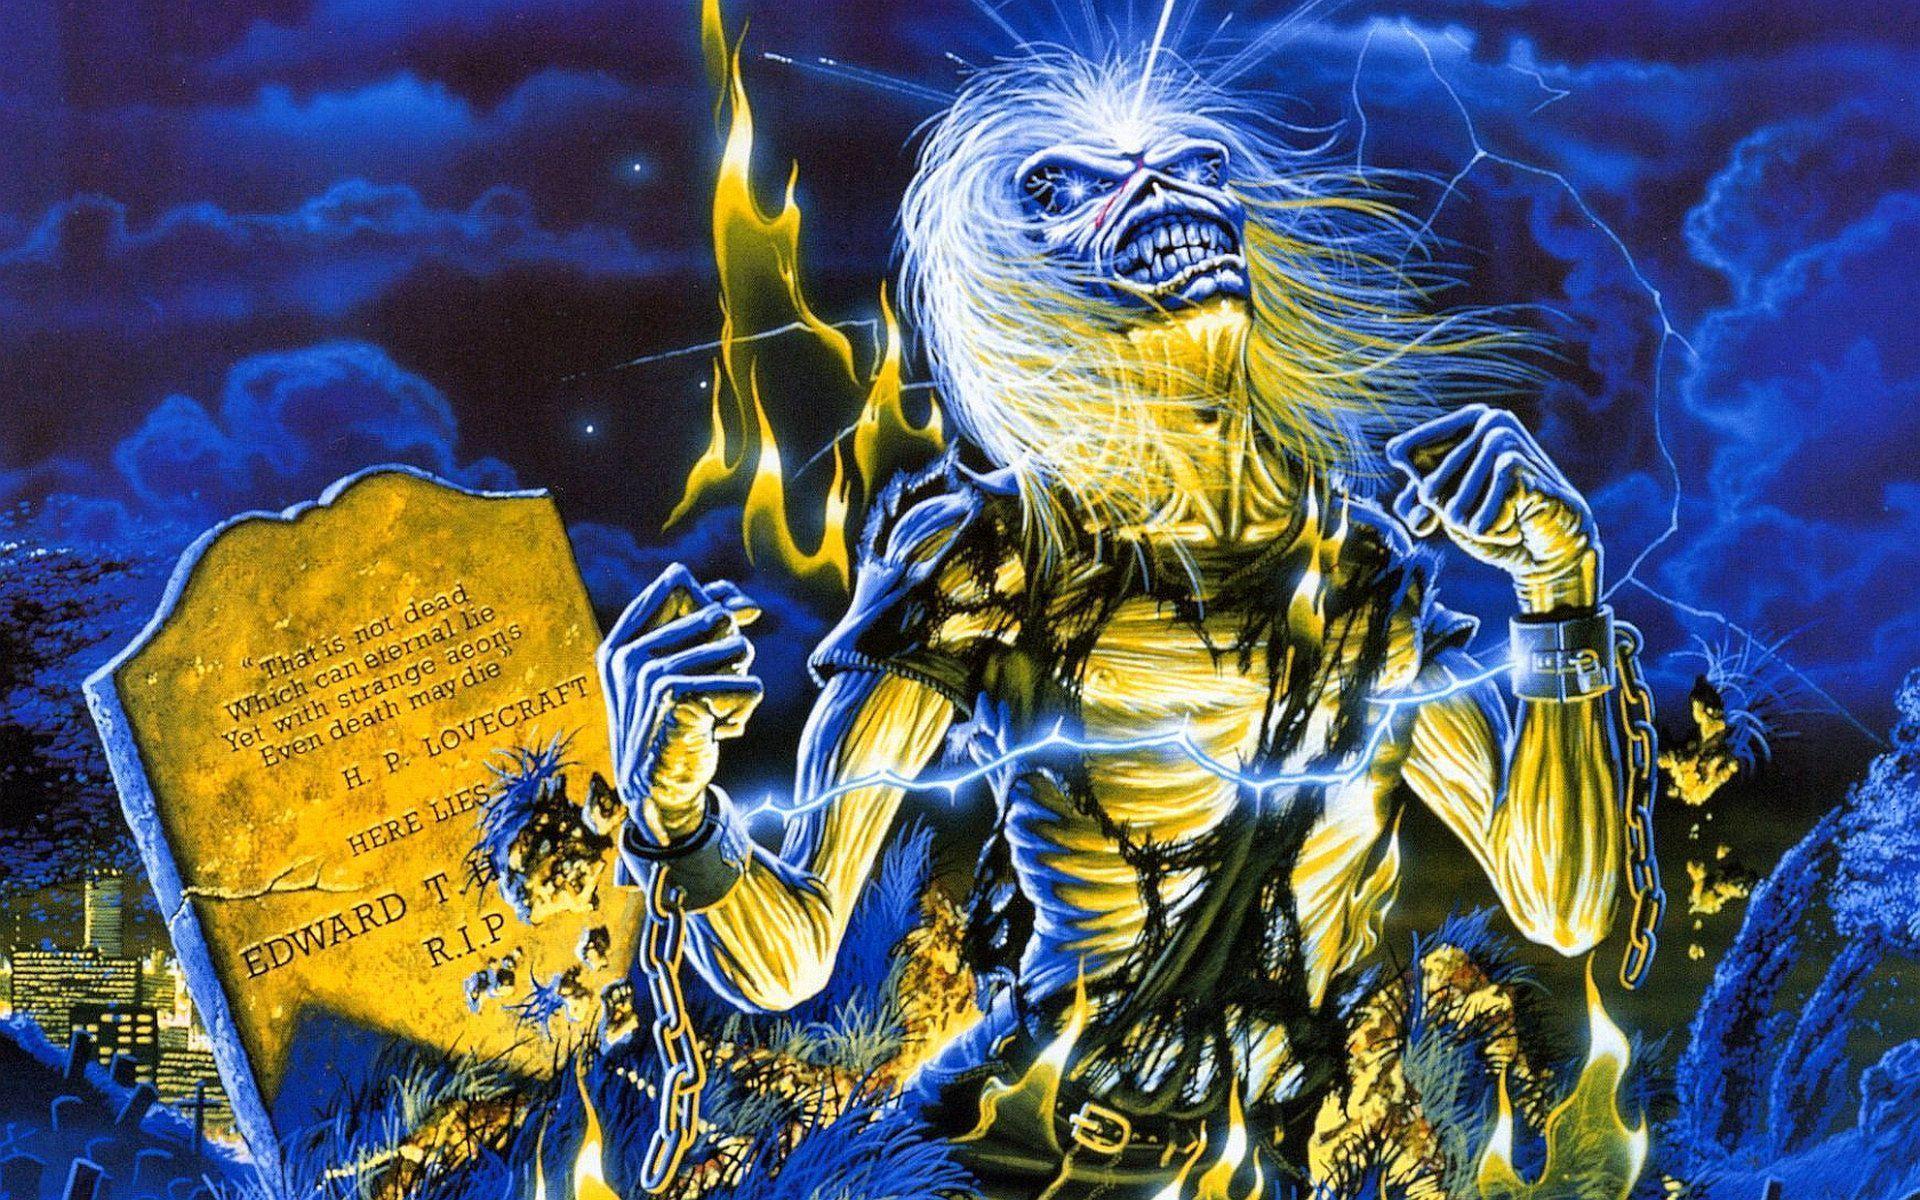 Iron Maiden Wallpaper. Iron Maiden Background